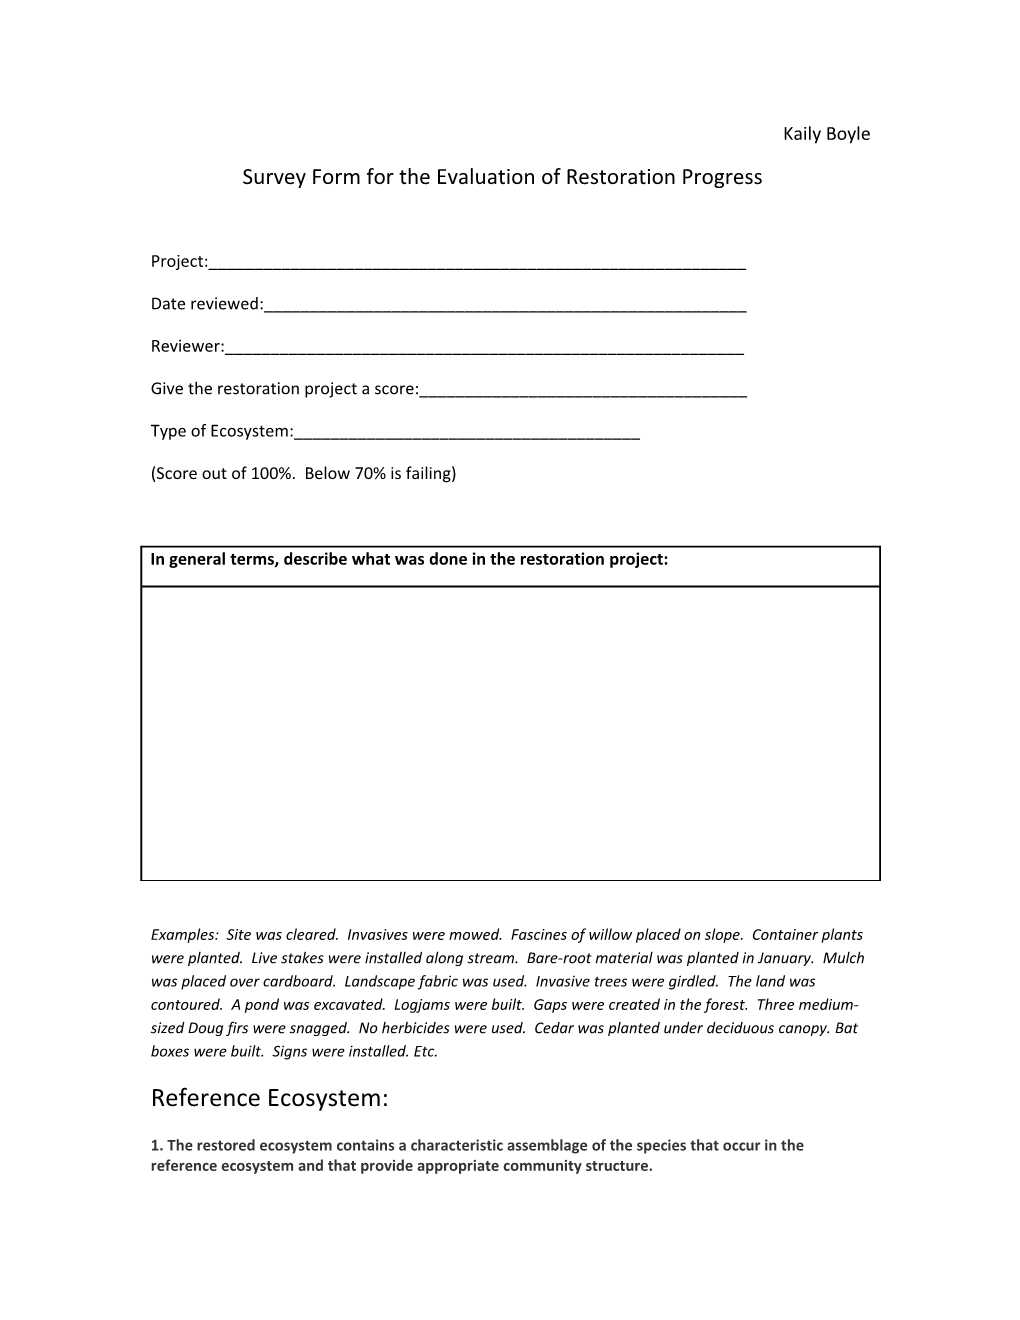 Survey Form for the Evaluation of Restoration Progress